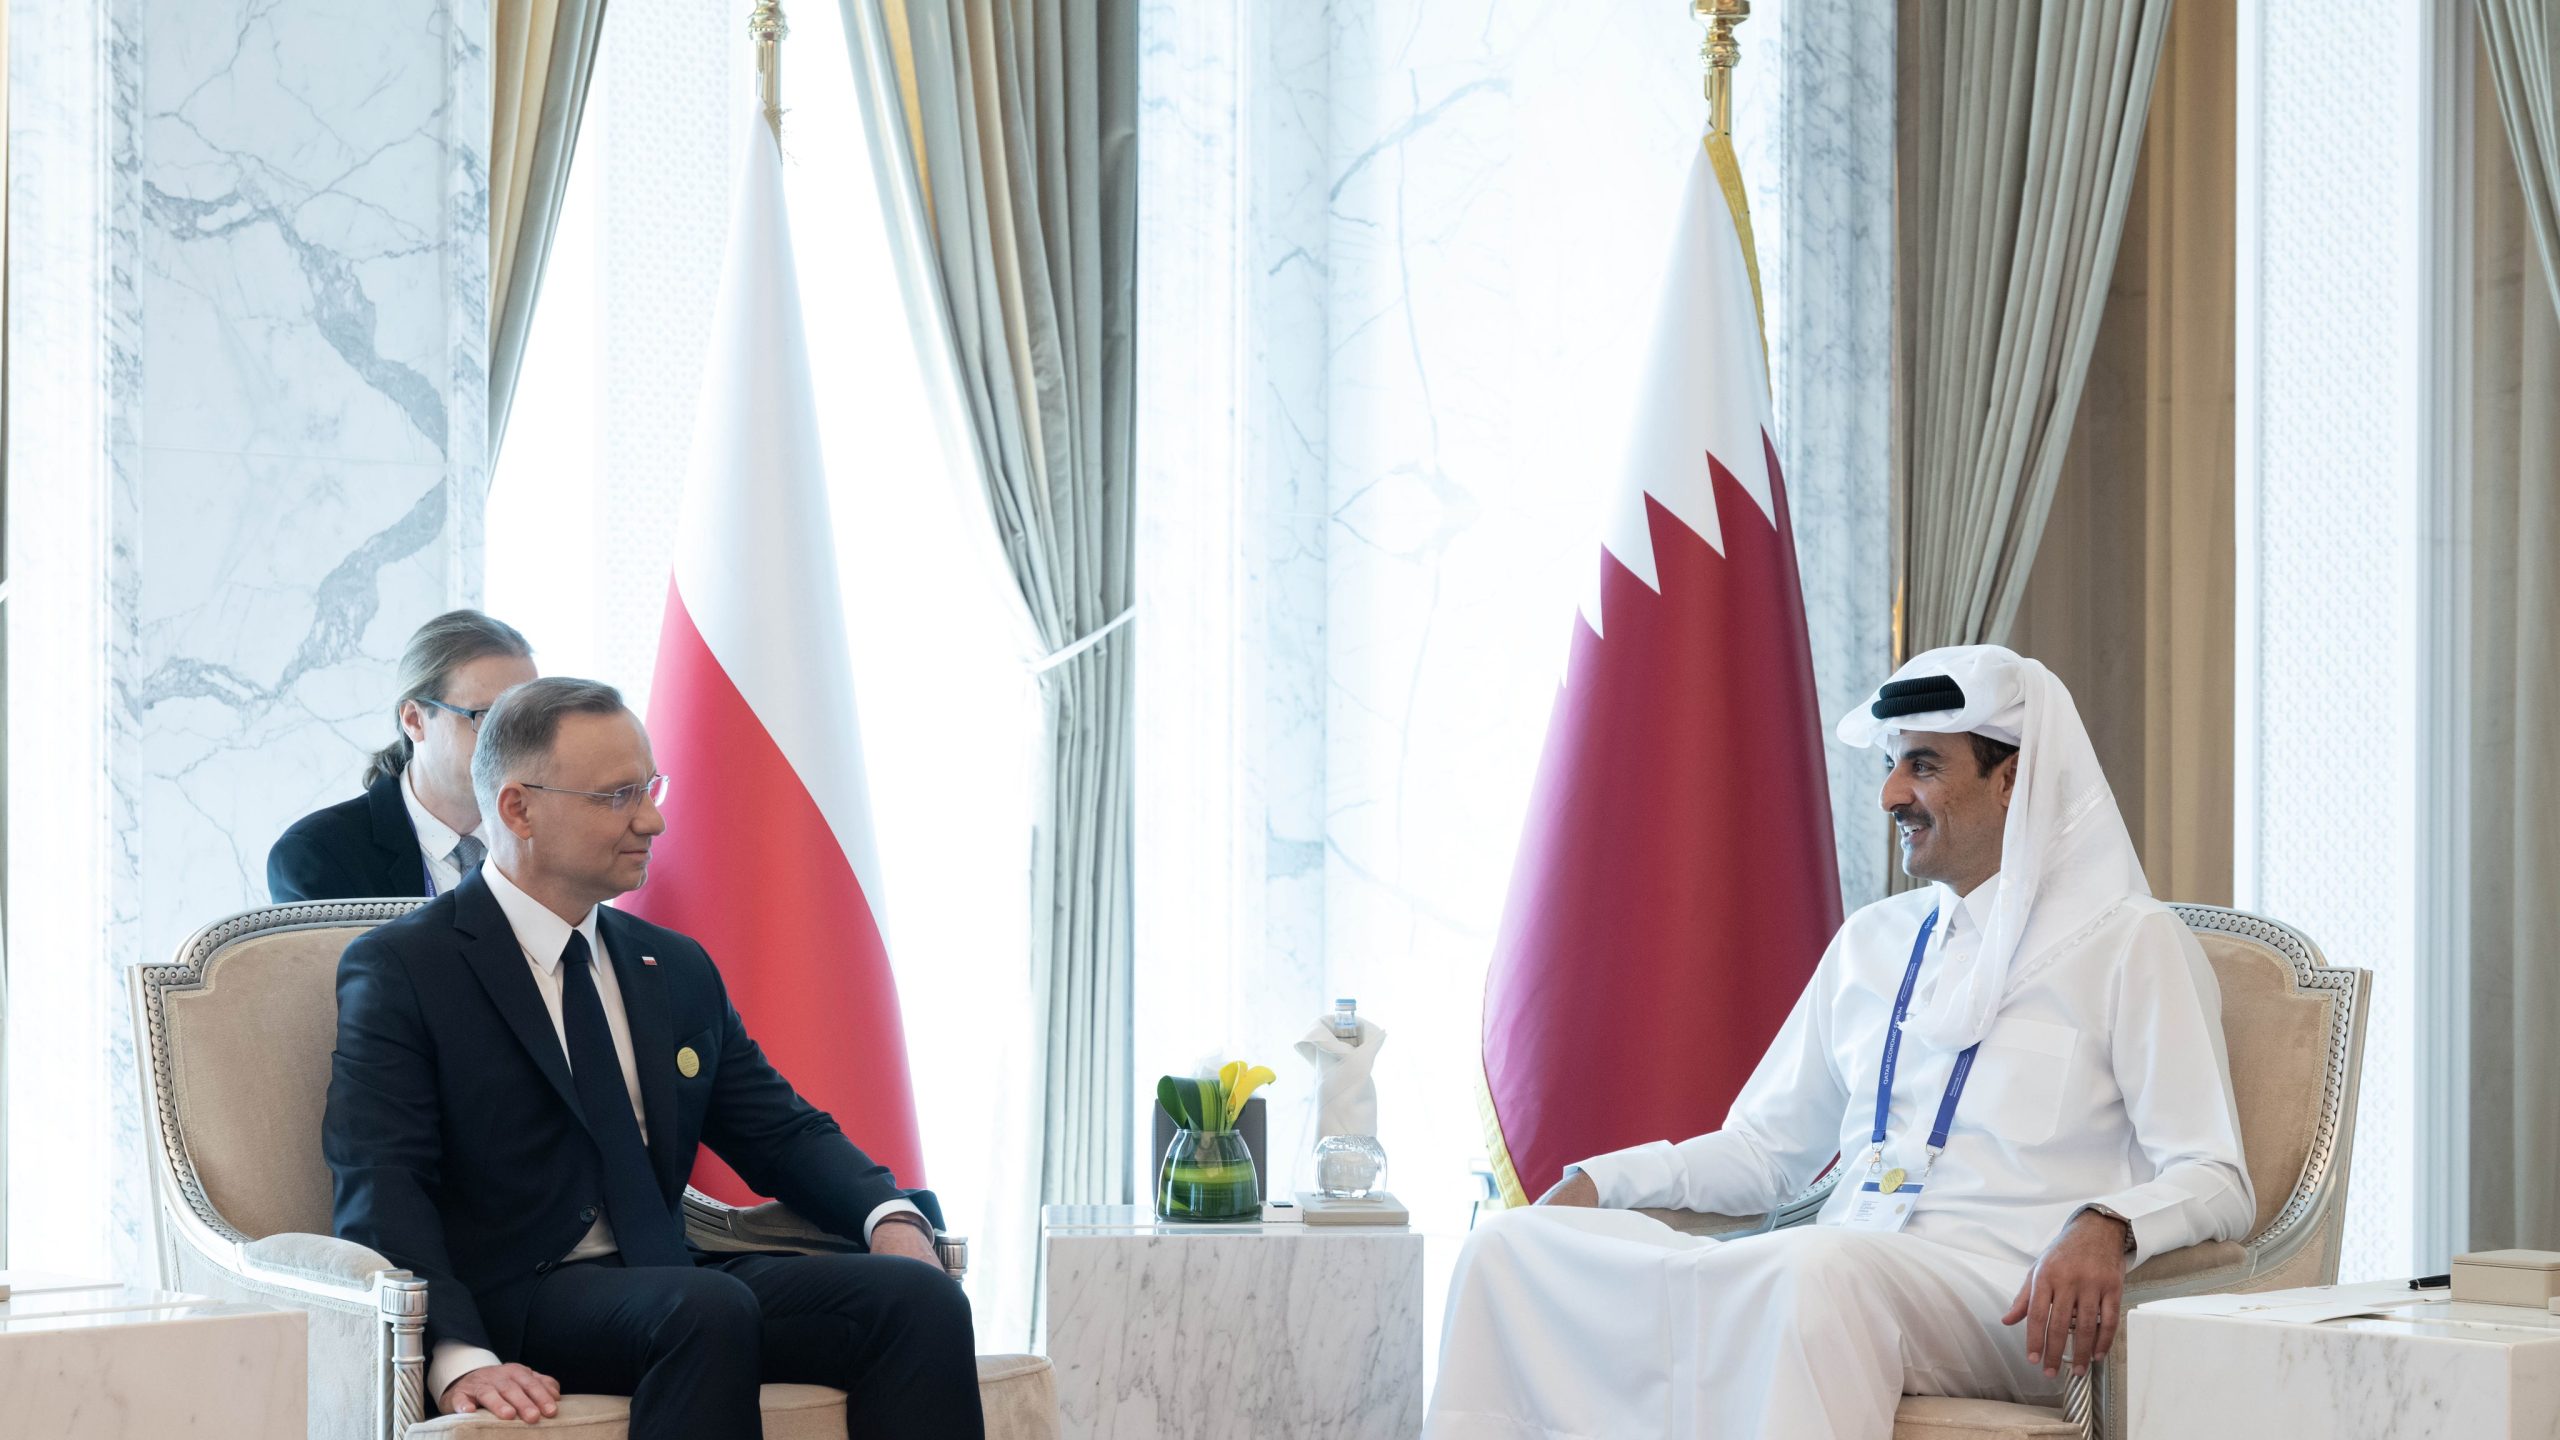 Qatar’s Amir meets Poland’s president on sidelines of Qatar Economic Forum